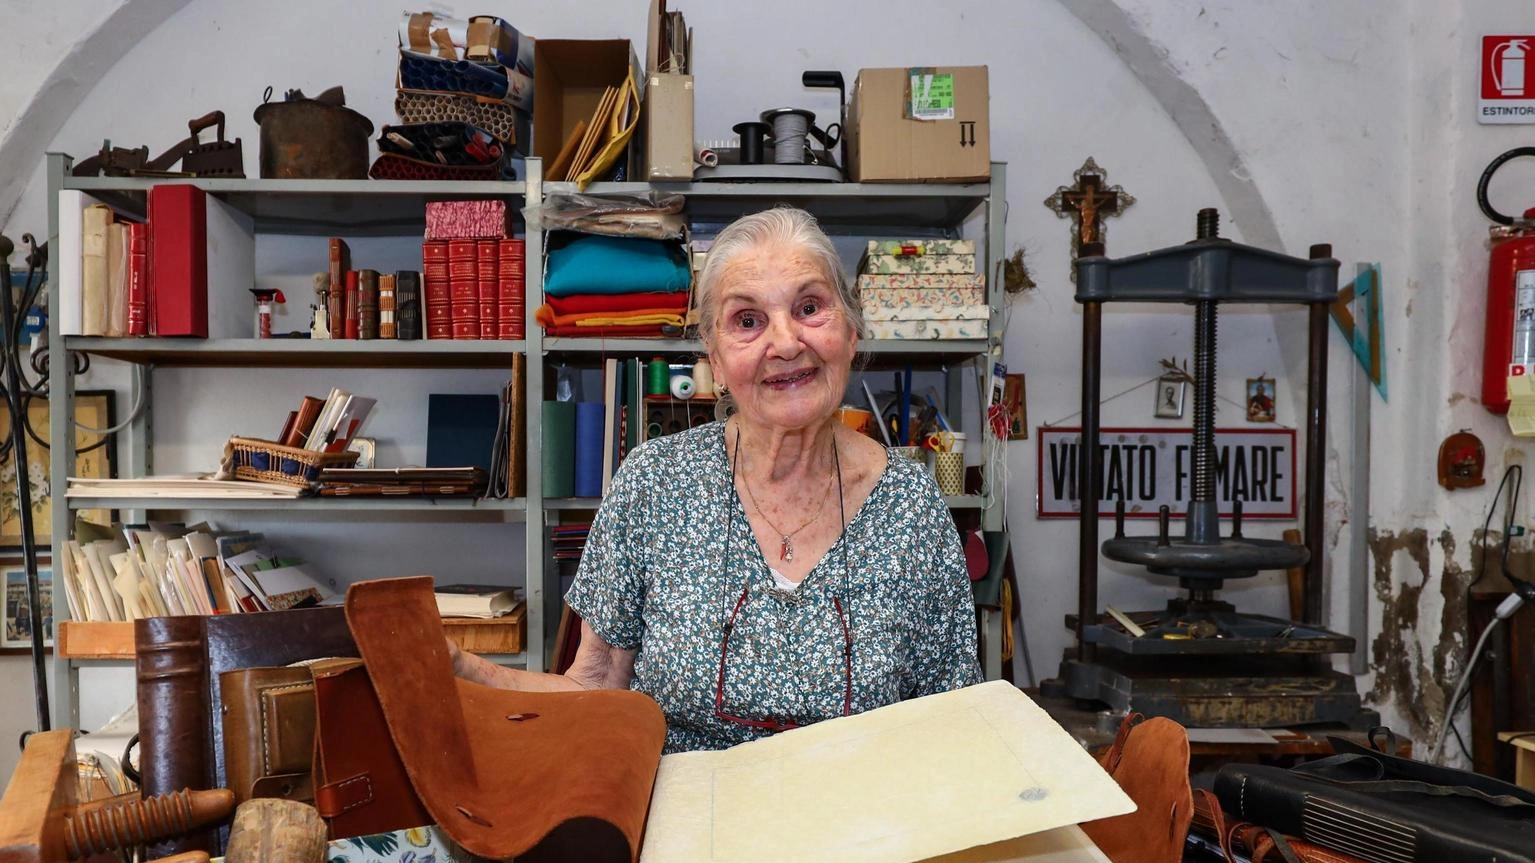 La sapienza nelle mani. Giuseppina Melani rilega i libri a 87 anni: "Così mi sento viva"